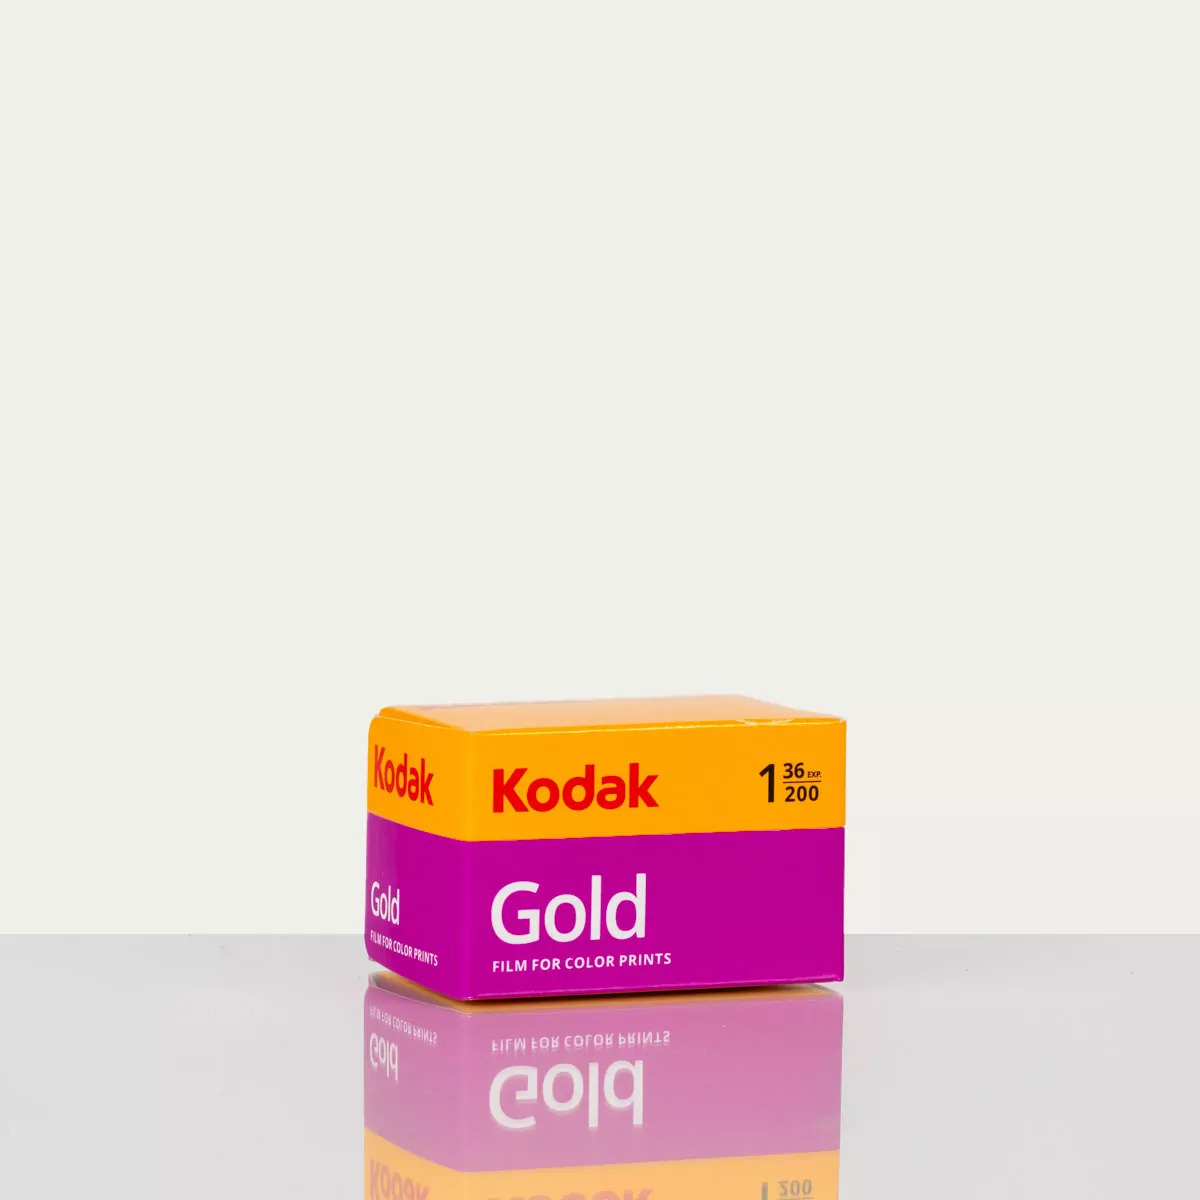 Kodak GOLD 200